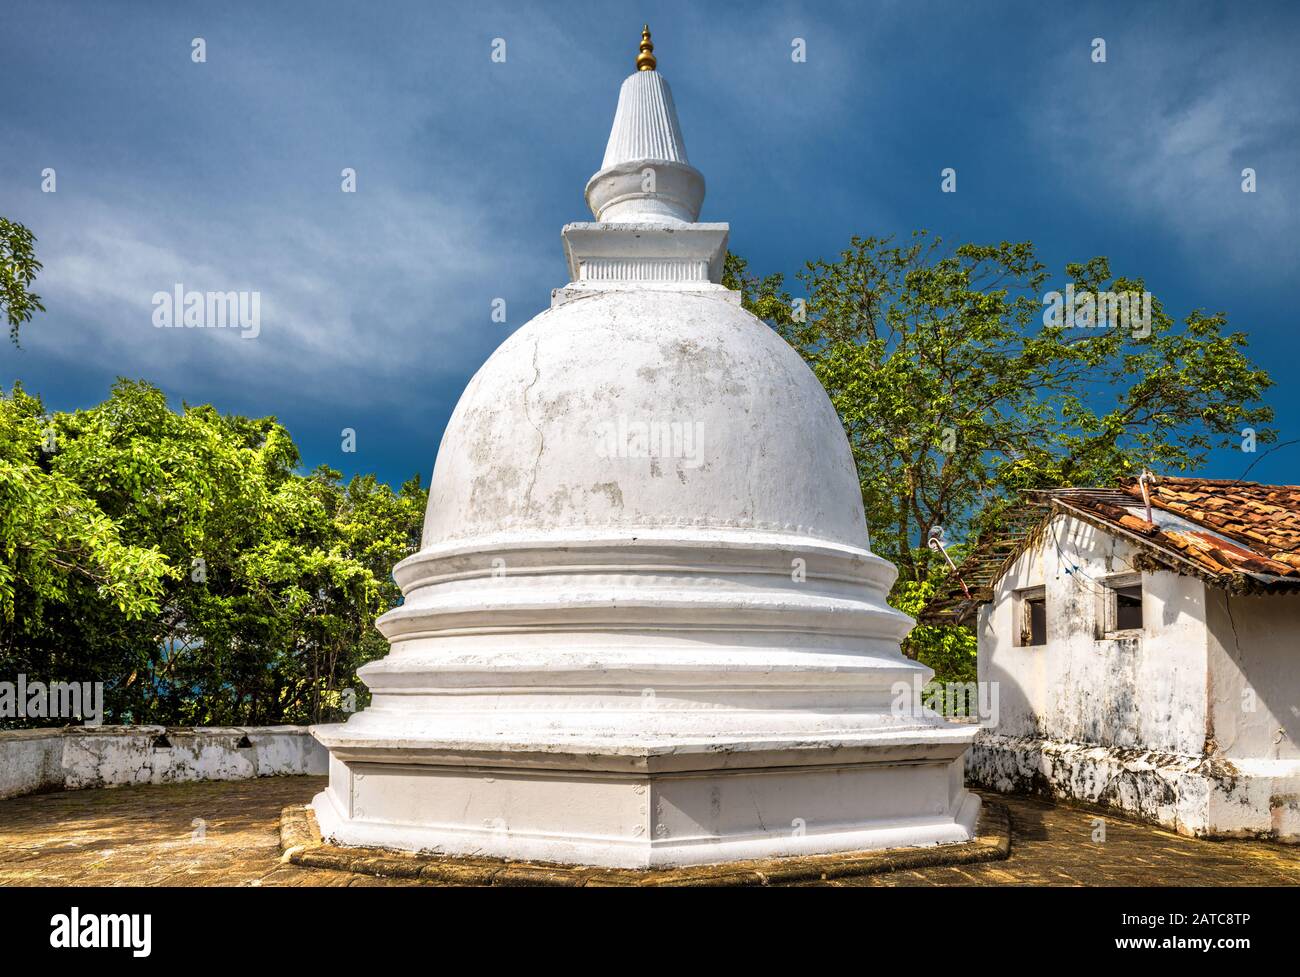 Buddhistischer Stupa im Tempel von Mulkirigala, Sri Lanka. Mulkirigala Raja Maha Vihara ist ein alter buddhistischer Felsentempelkomplex. Der alte Stupa im Stockfoto